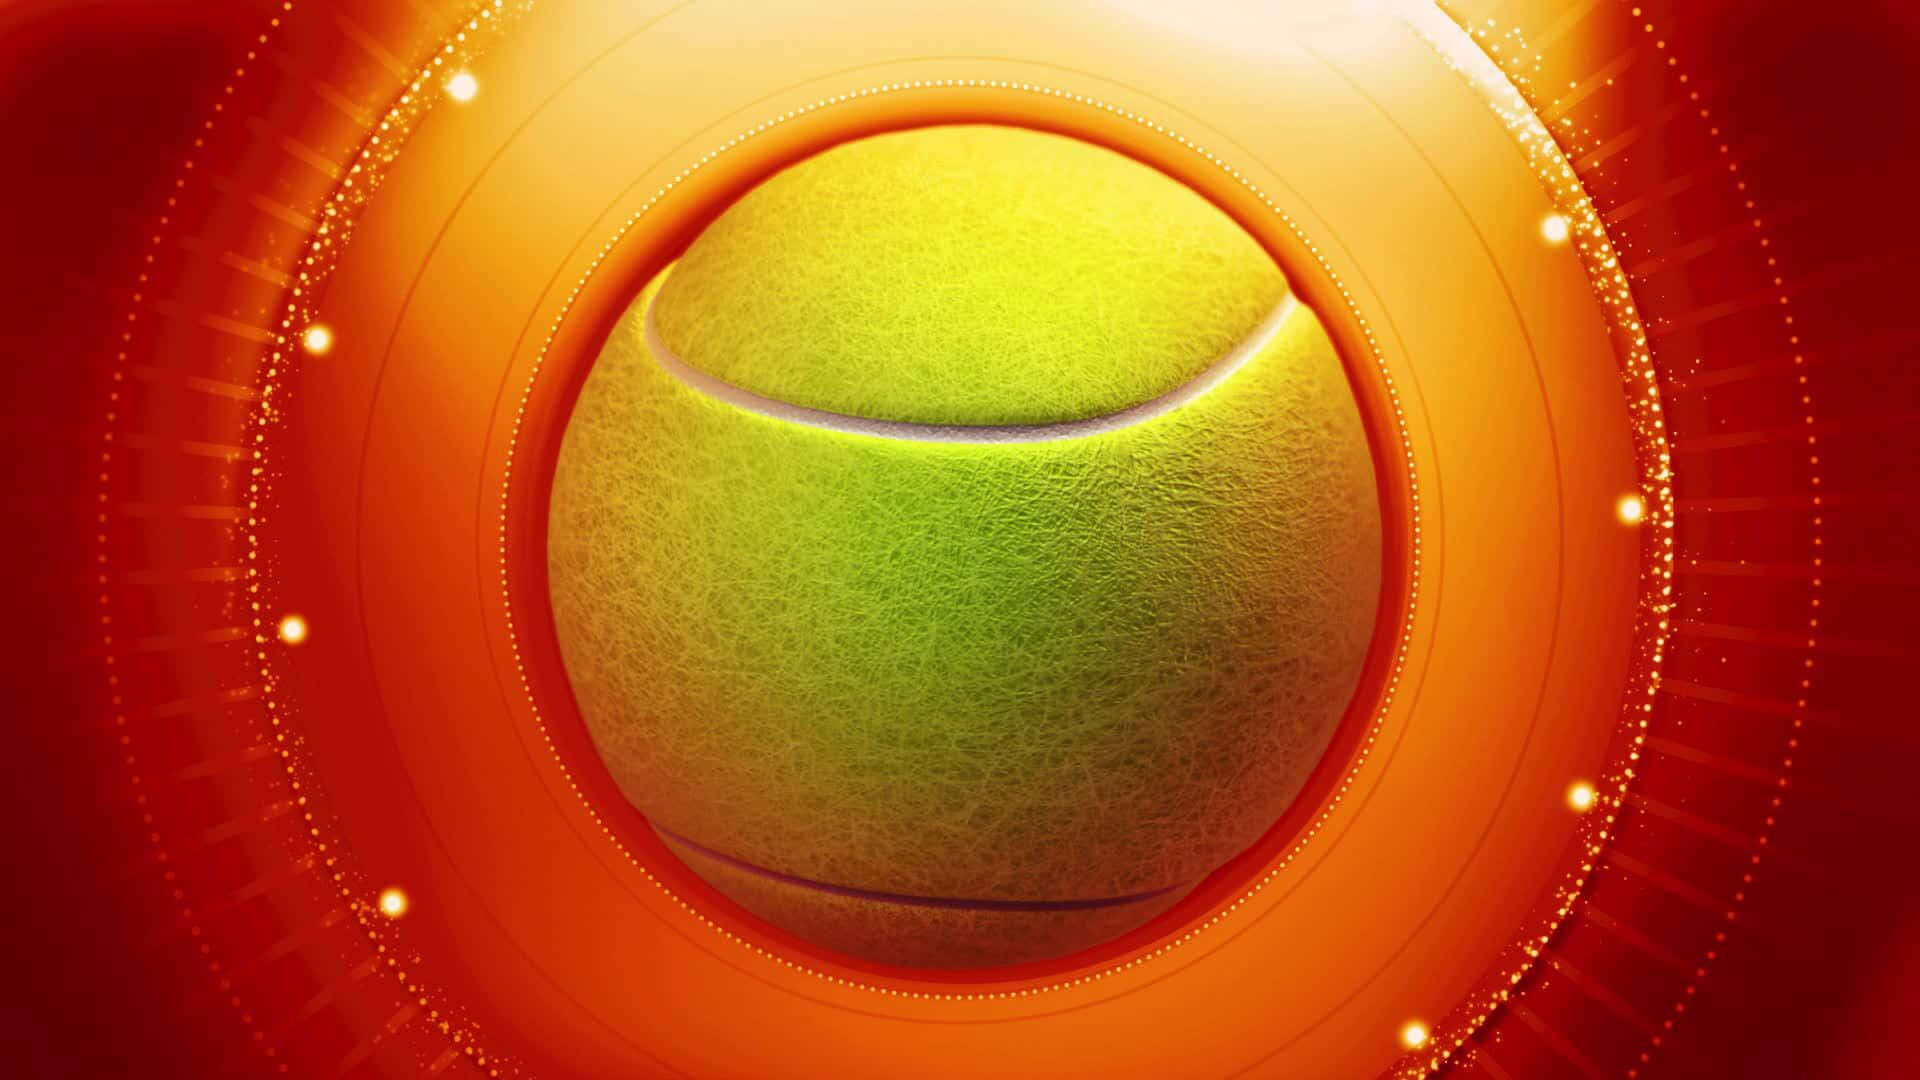 HD Orange Aesthetic Tennis Ball Background